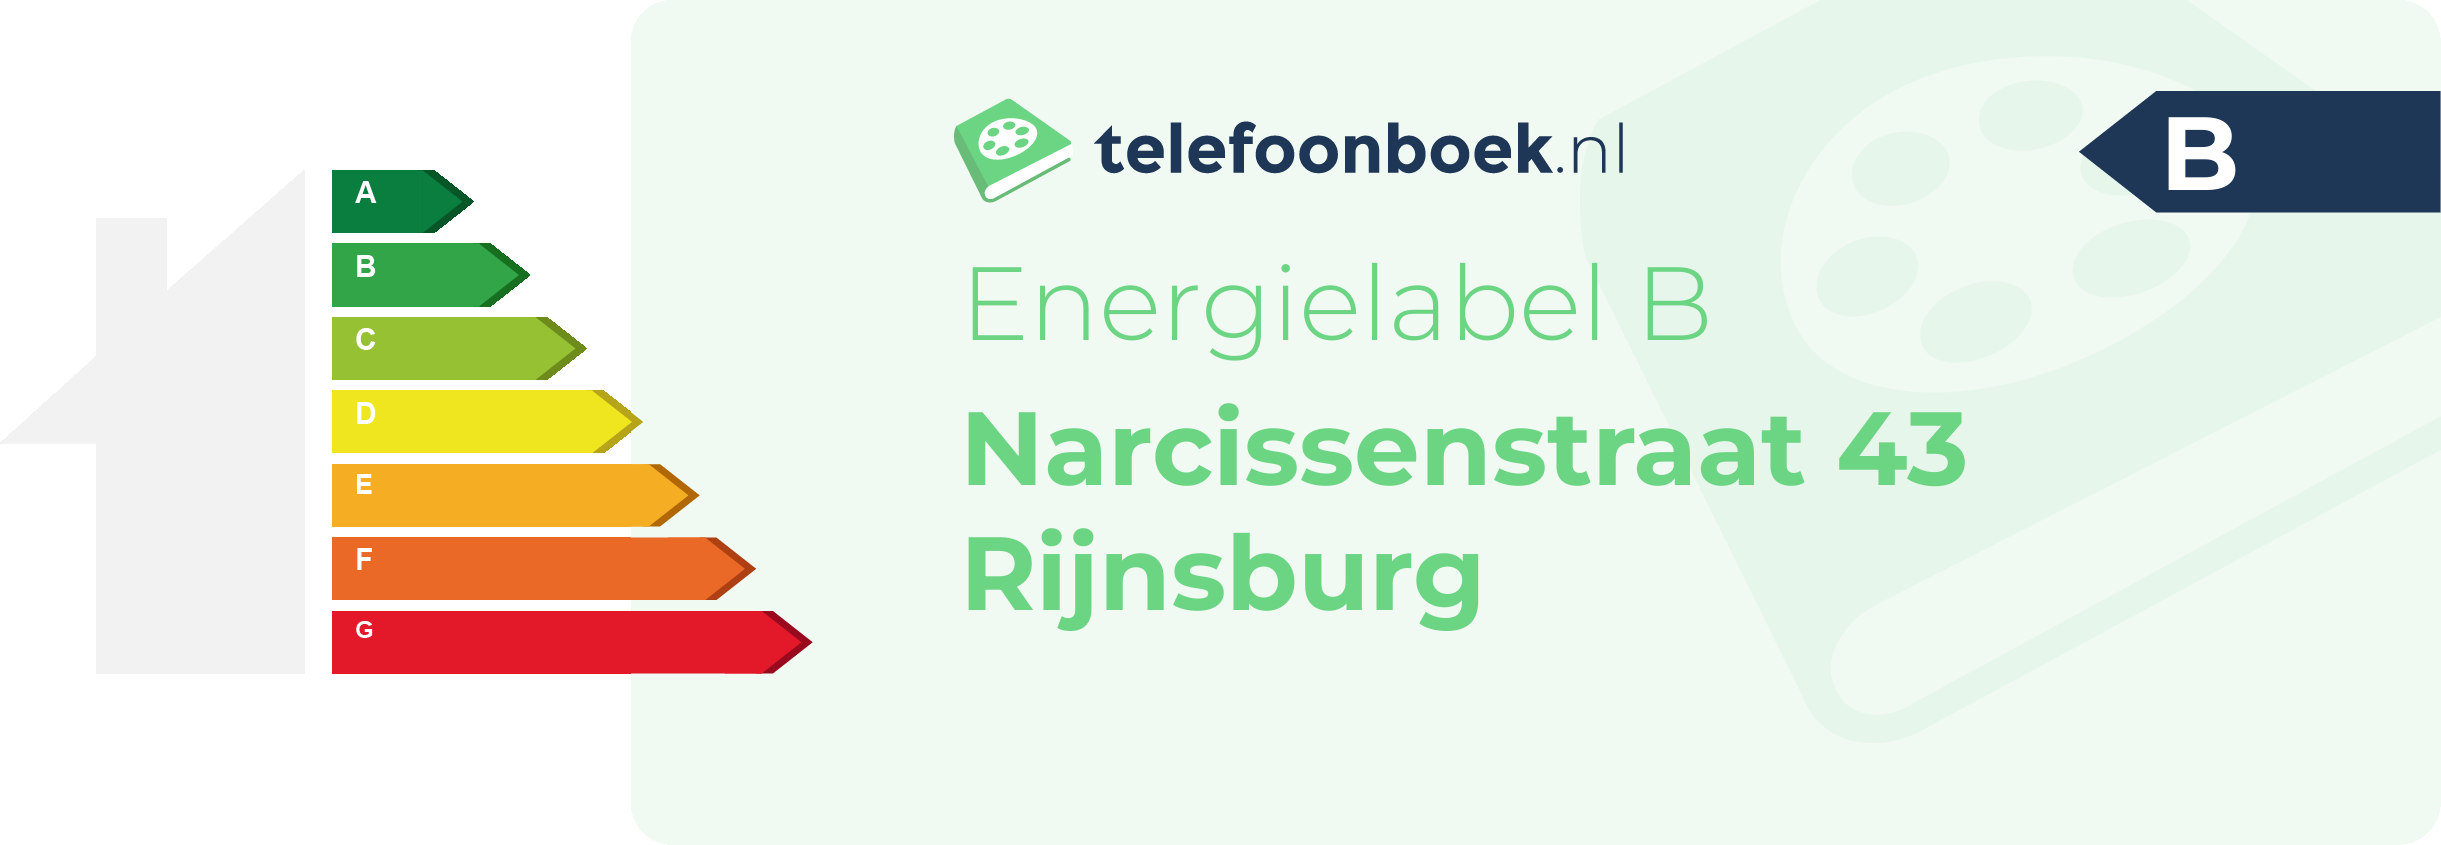 Energielabel Narcissenstraat 43 Rijnsburg